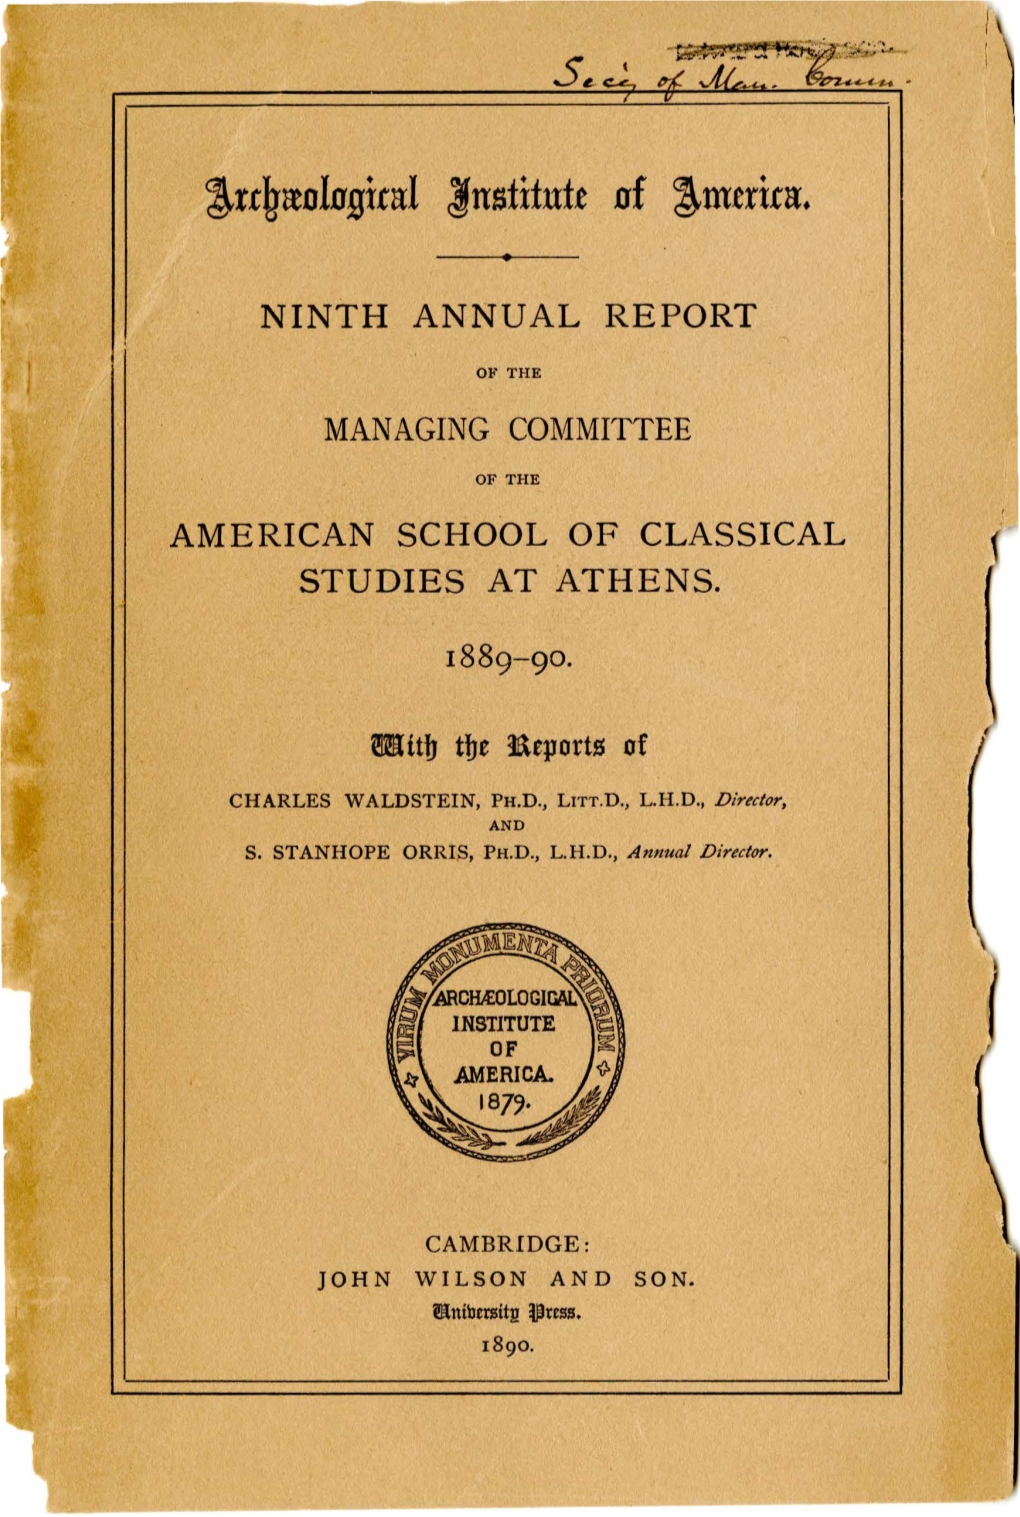 ~Rcgreologital ~Nstifutt of ~Mtrira. NINTH ANNUAL REPORT AMERICAN SCHOOL of CLASSICAL STUDIES at ATHENS